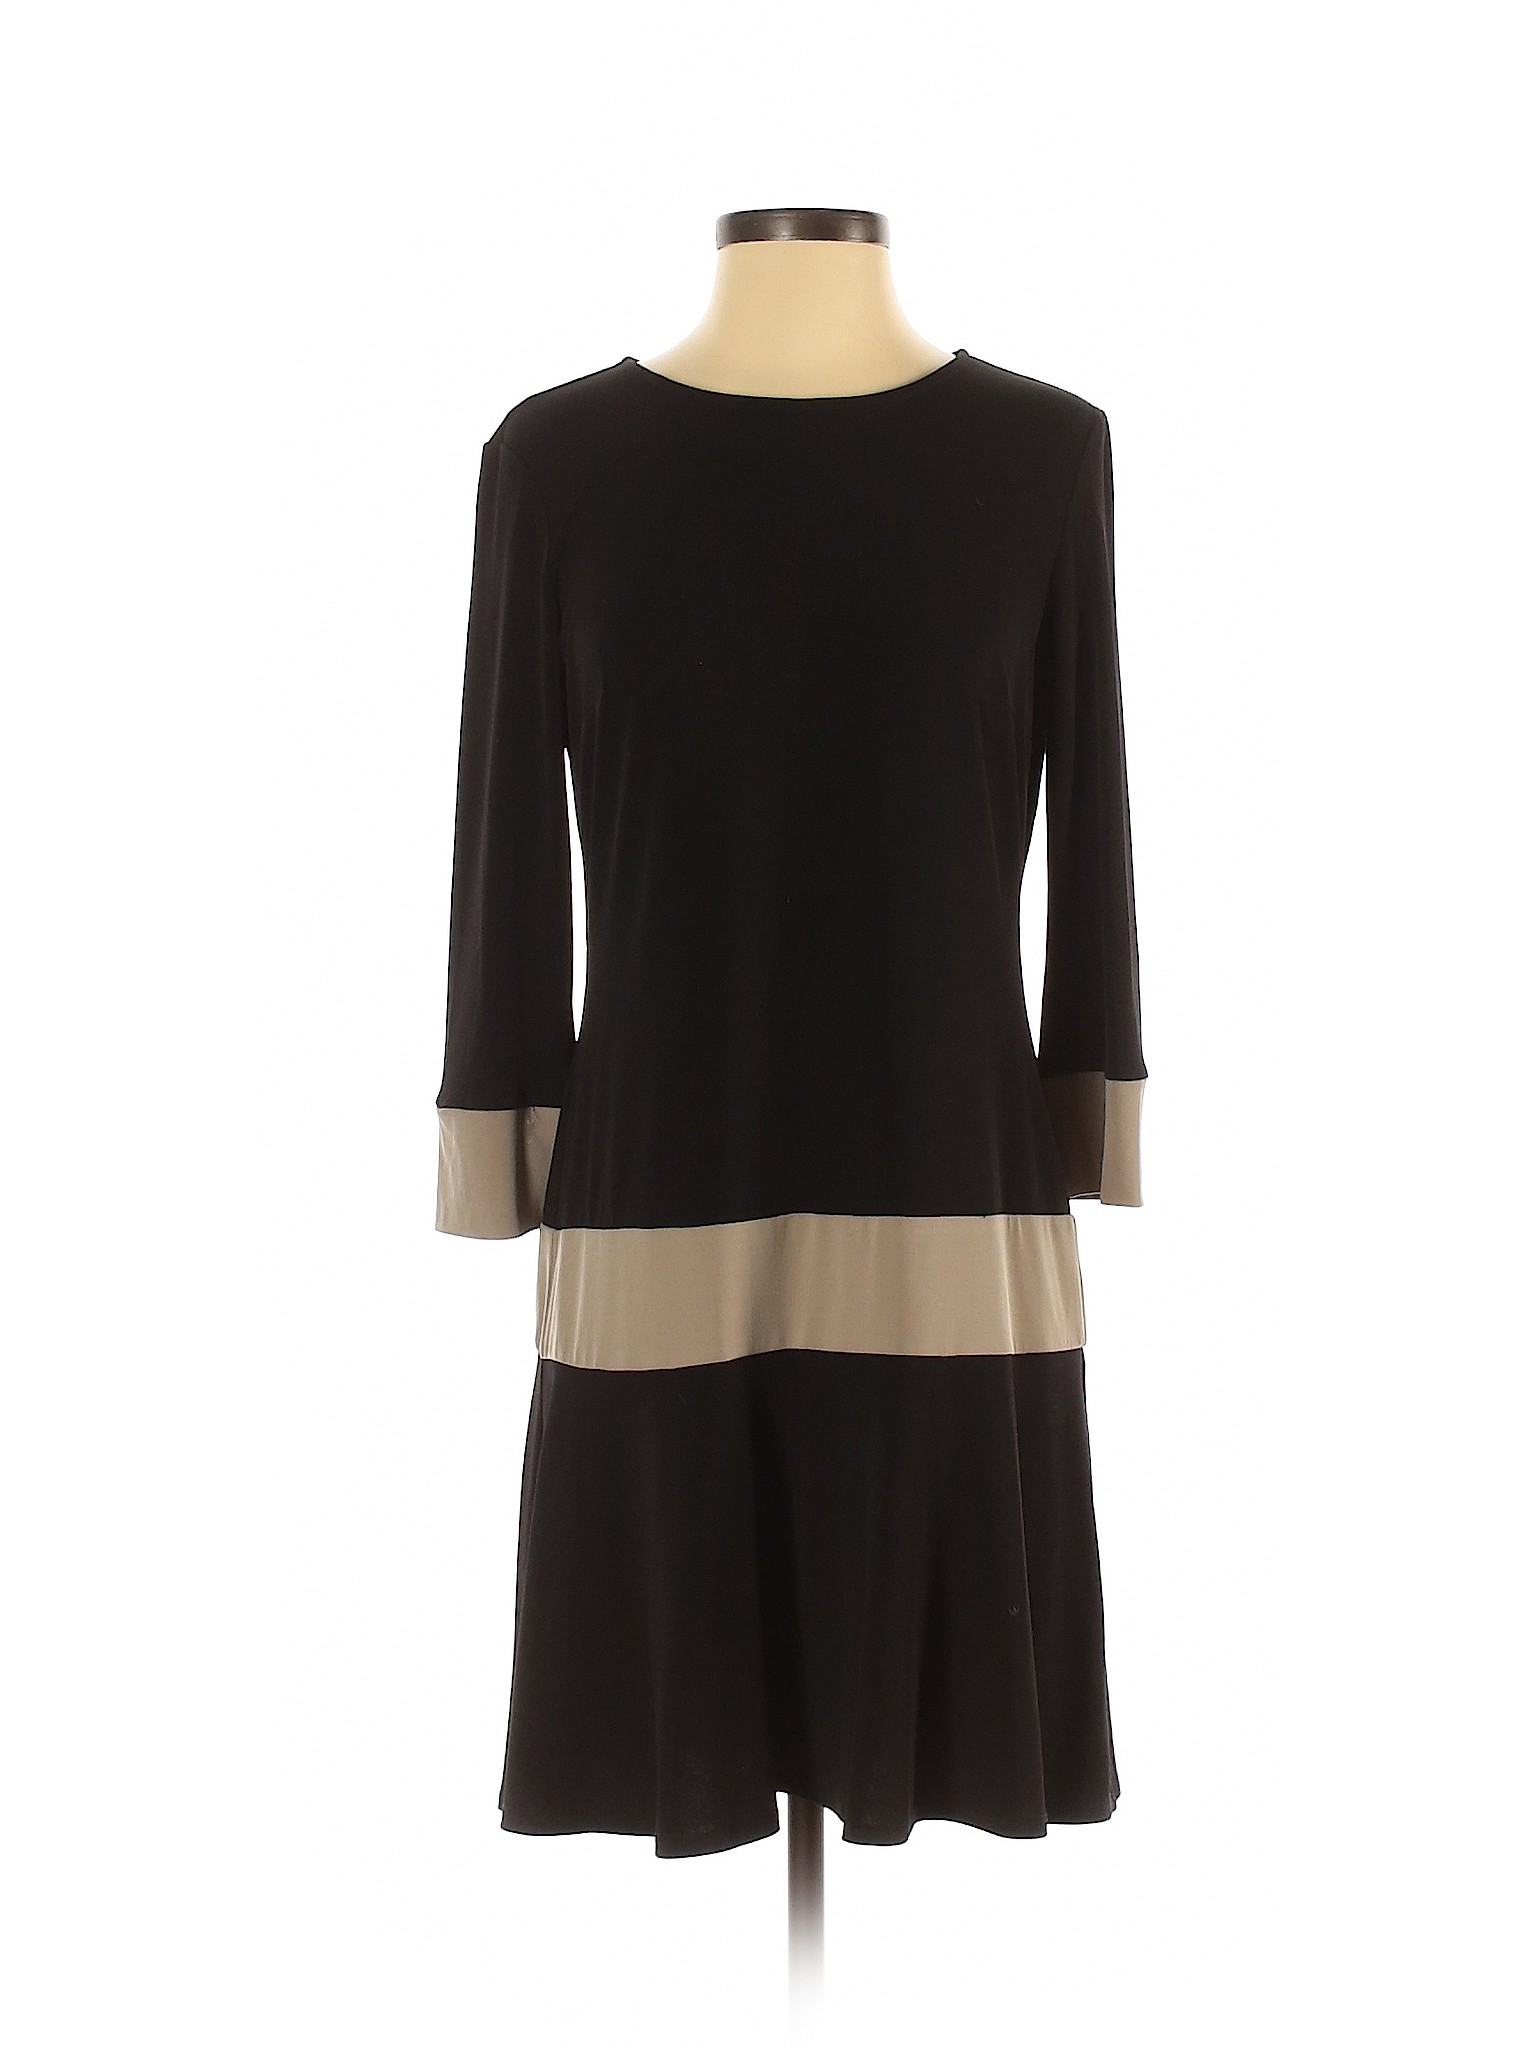 Alex + Alex Women Black Casual Dress 4 | eBay